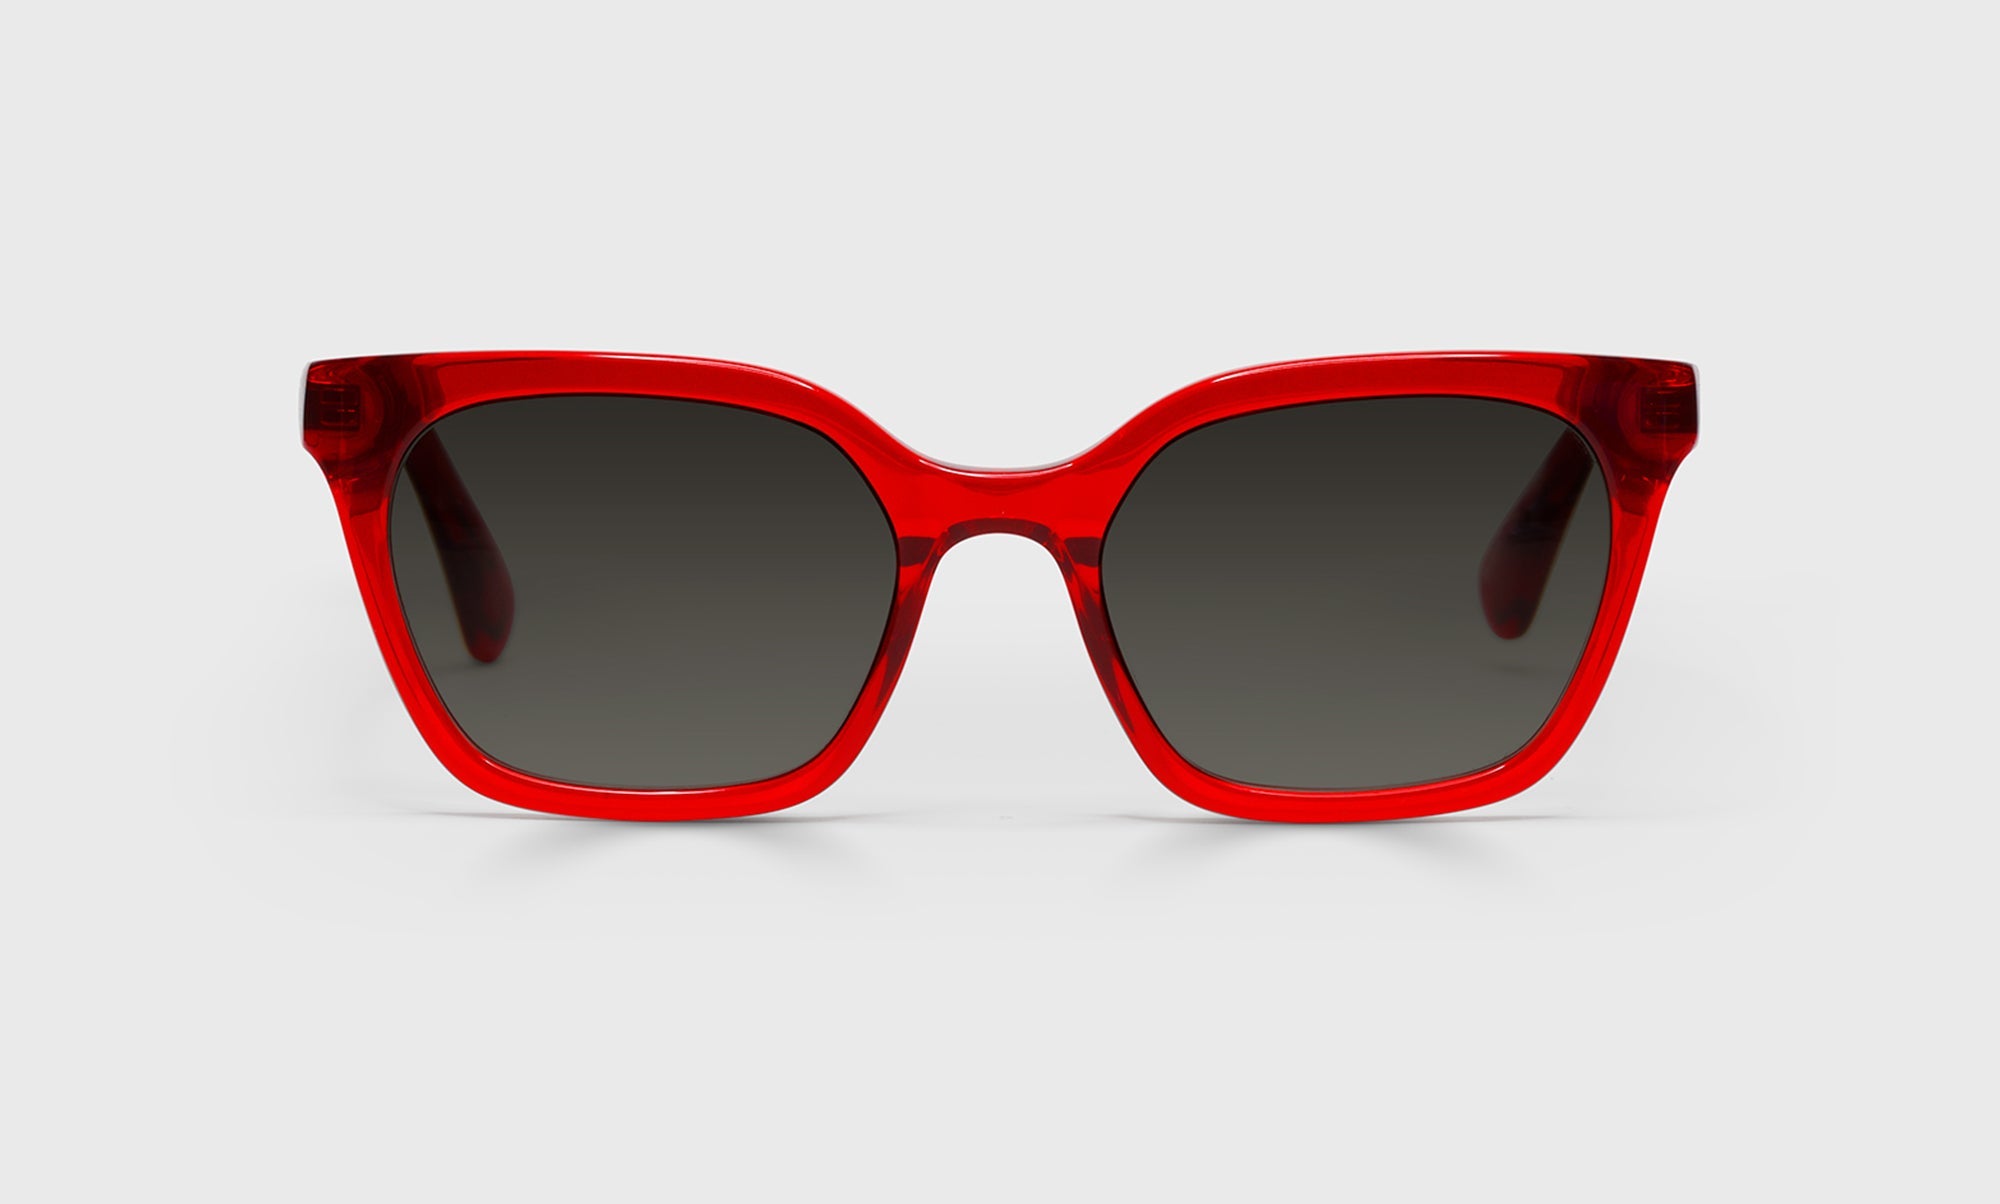 01-pg | eyebobs premium designer overlook readers, blue light and prescription glasses in red crystal, polarized grey